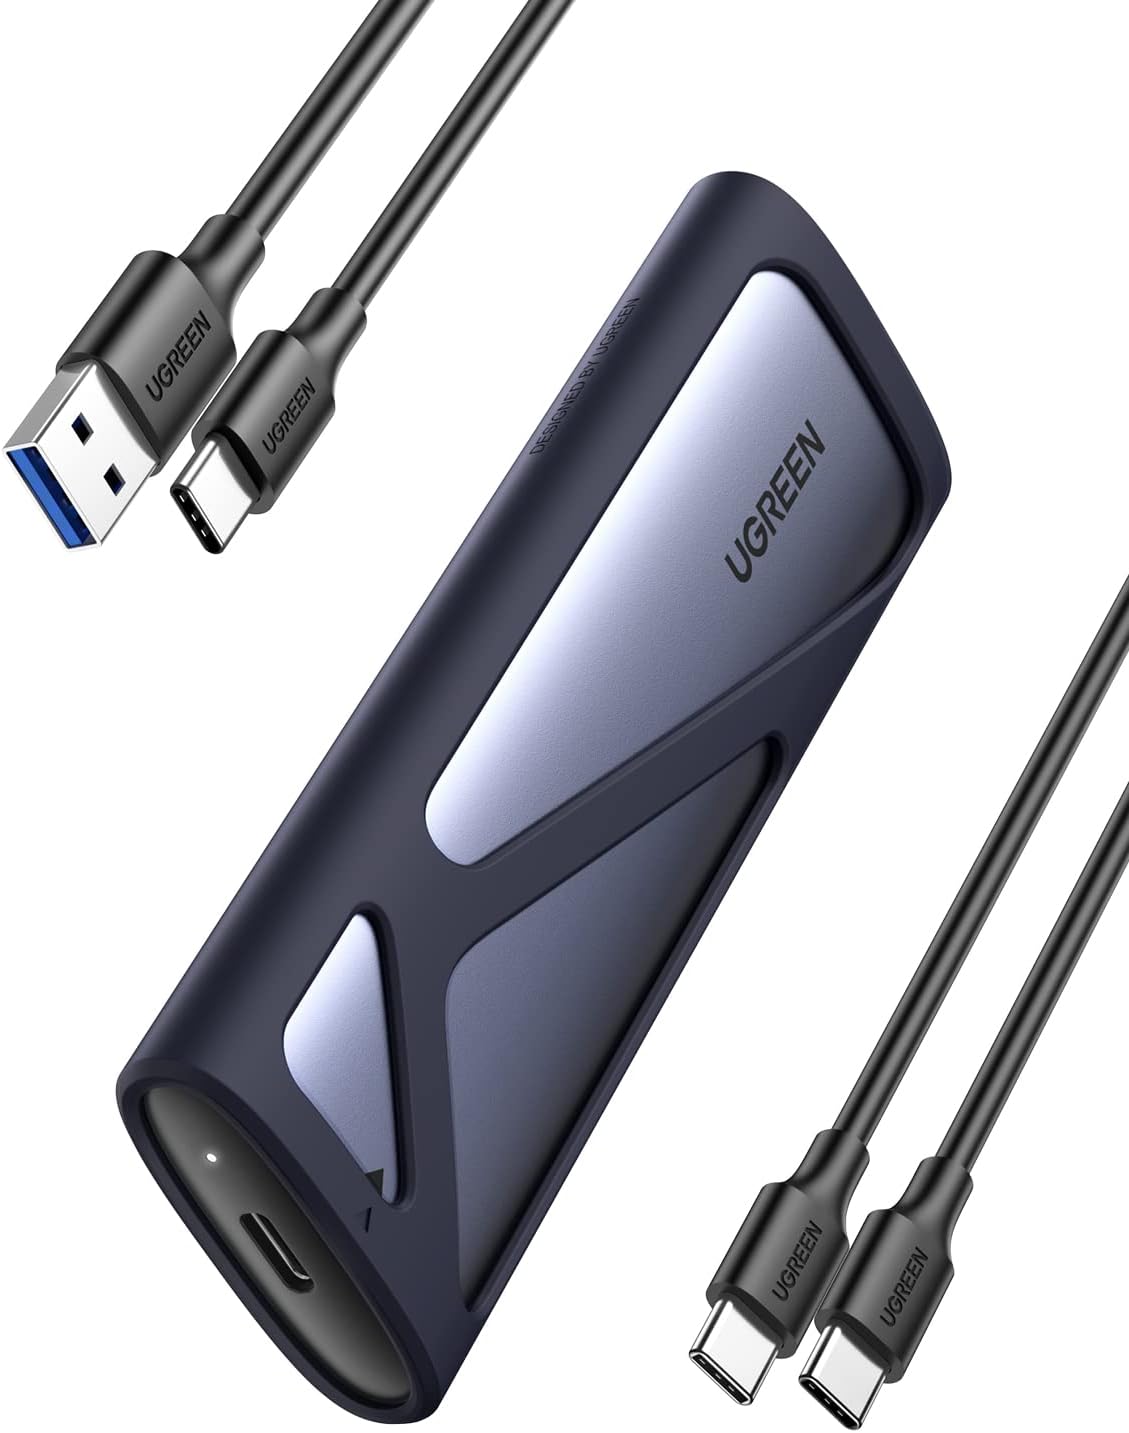 Boîtier SSD M.2 NVME SATA USB 3.2 – Ugreen – Zone Affaire